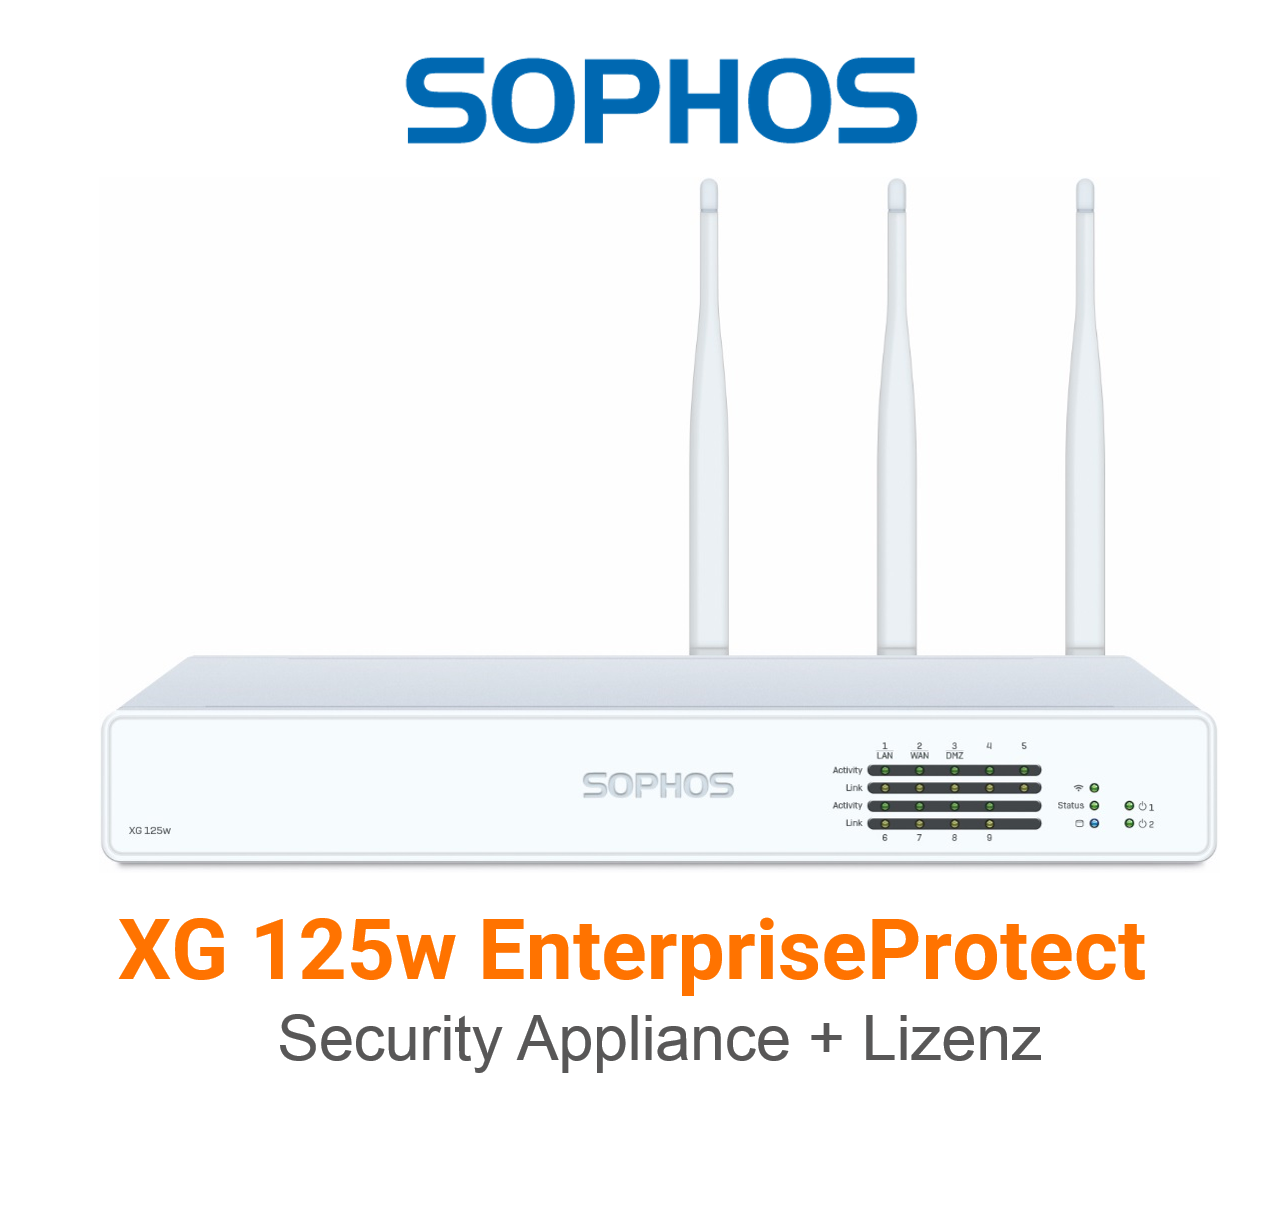 Sophos XG 125w EnterpriseProtect Bundle (Hardware + Lizenz)